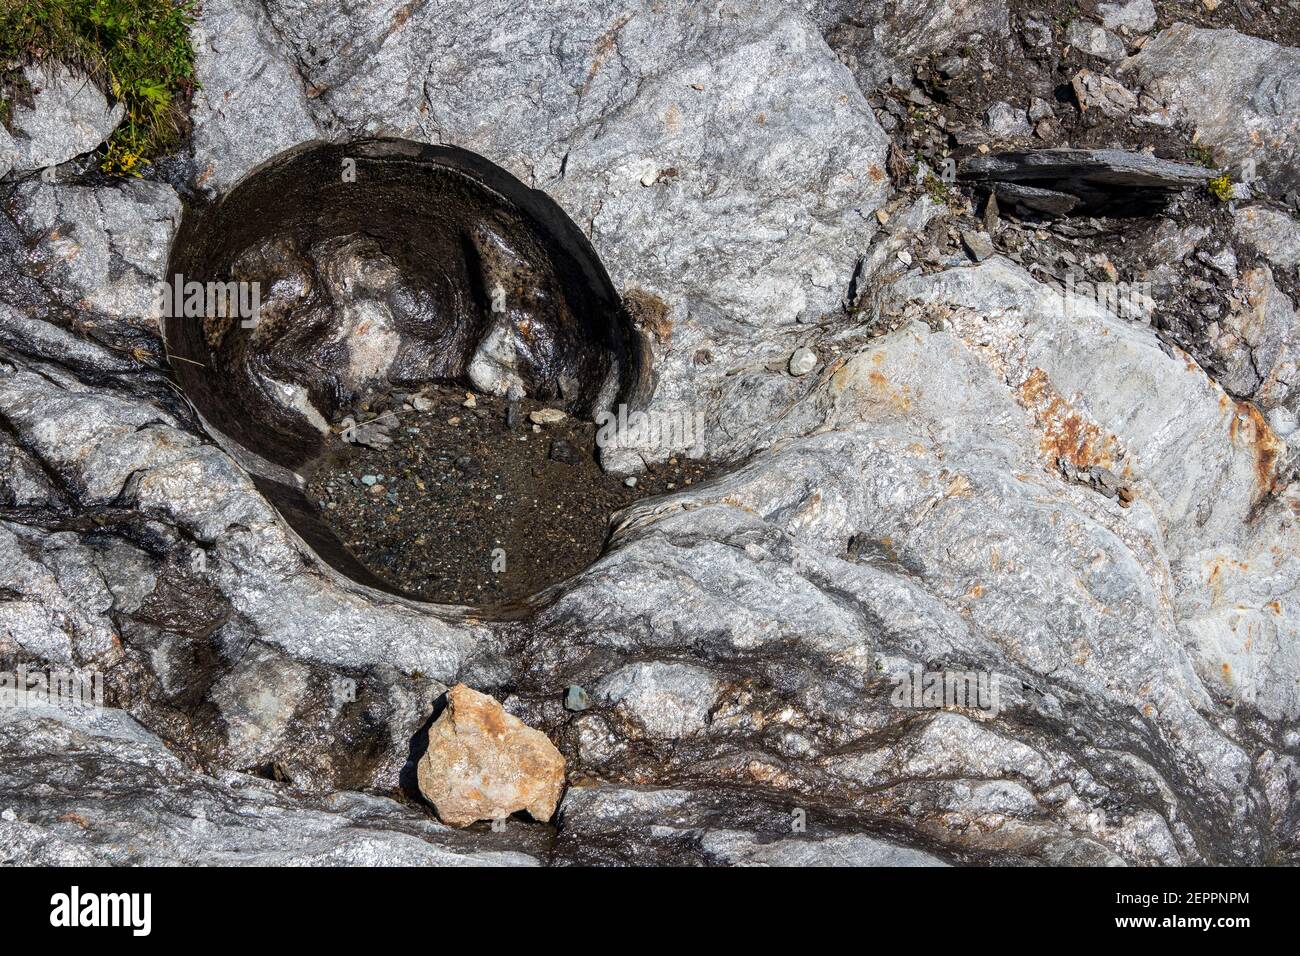 Geological features of smooth rocks near Johannishütte refuge. Dorfer valley. Venediger group. Virgental. Austrian Alps. Europe Stock Photo